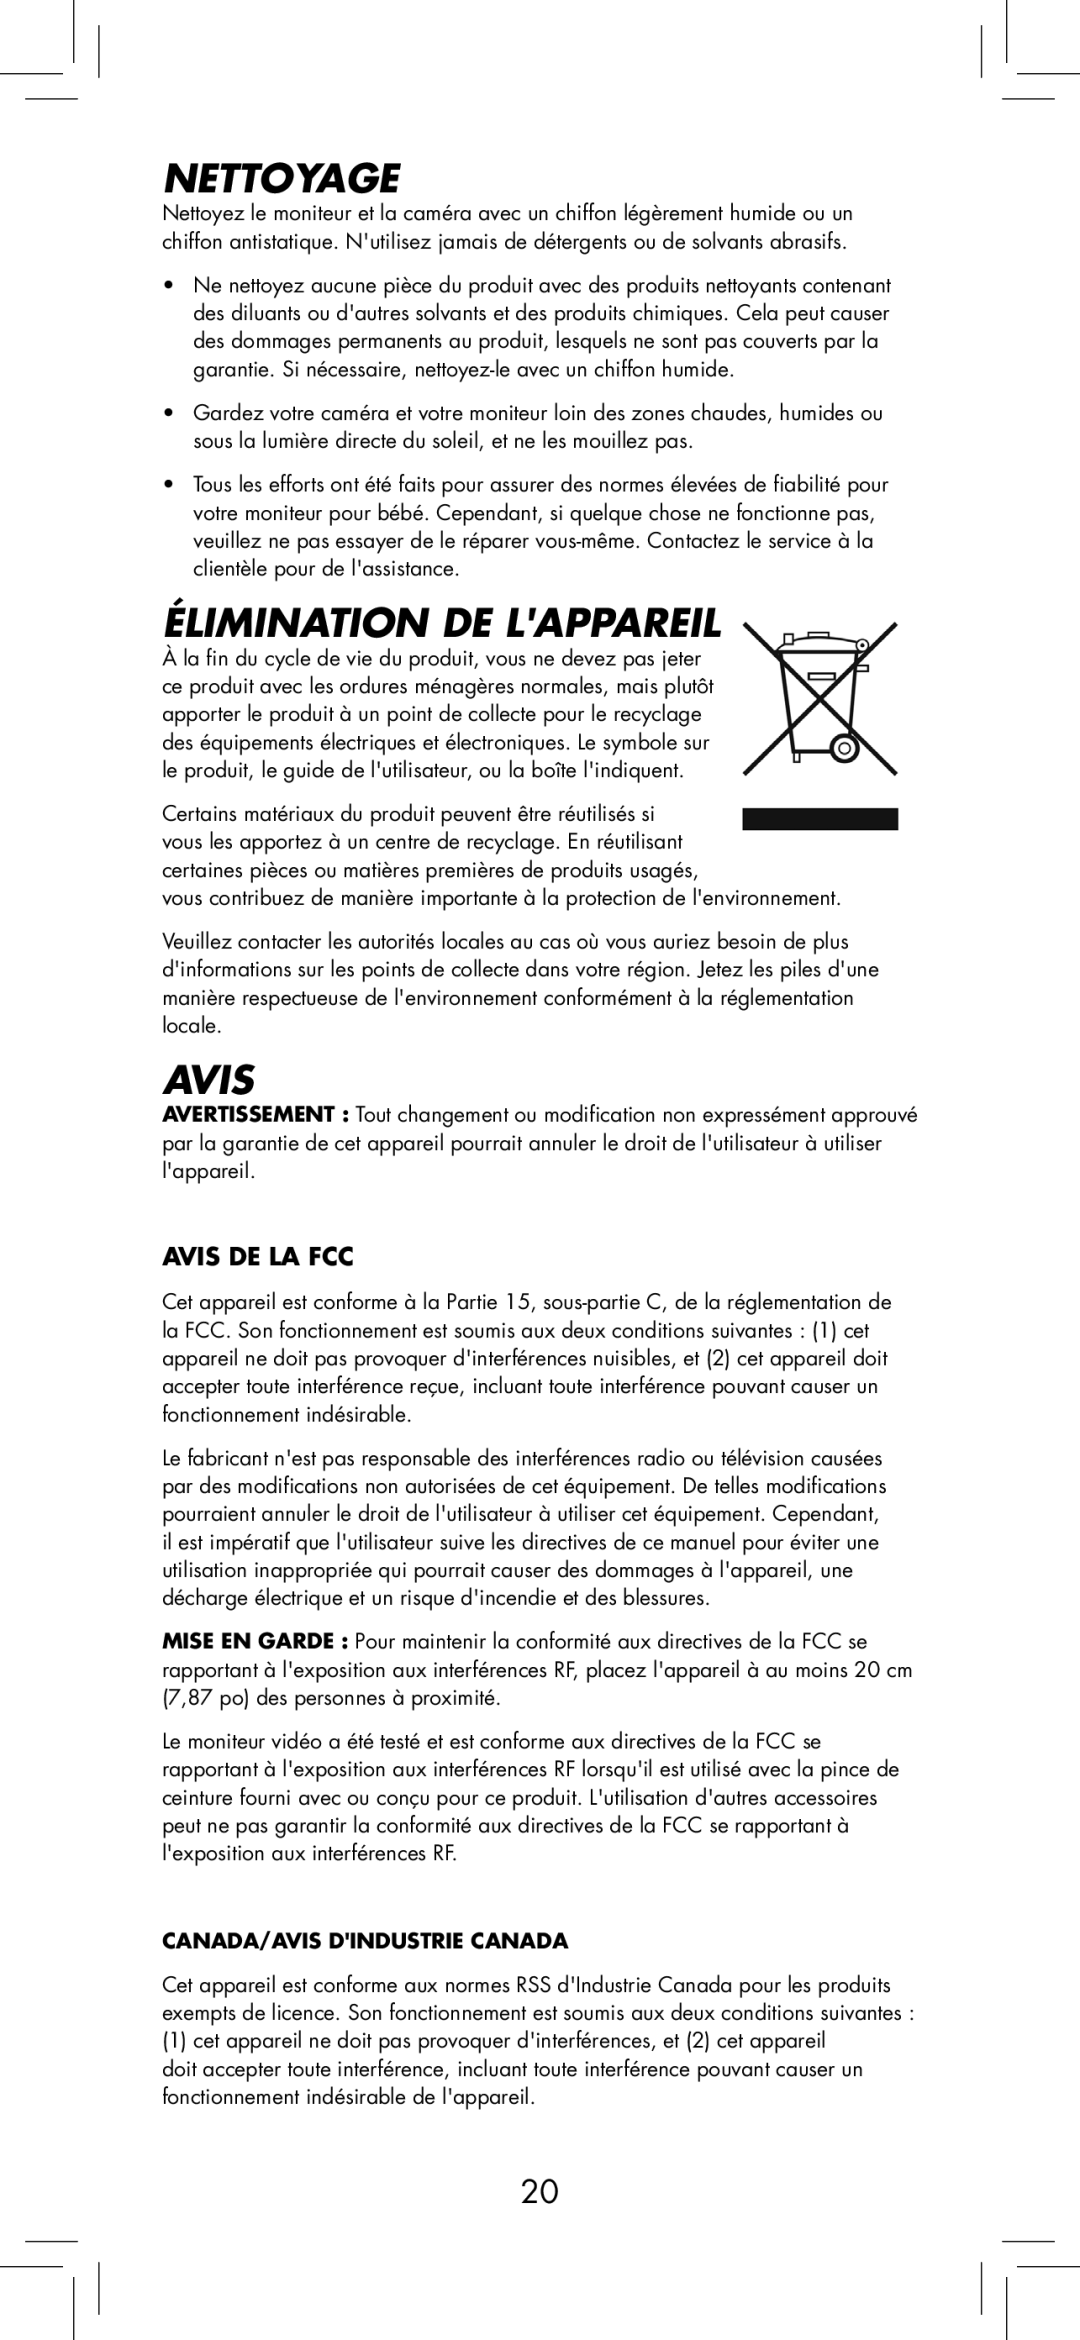 LOREX Technology BB2411 manual Nettoyage, Élimination De Lappareil, Avis De La Fcc, Canada/Avis Dindustrie Canada 